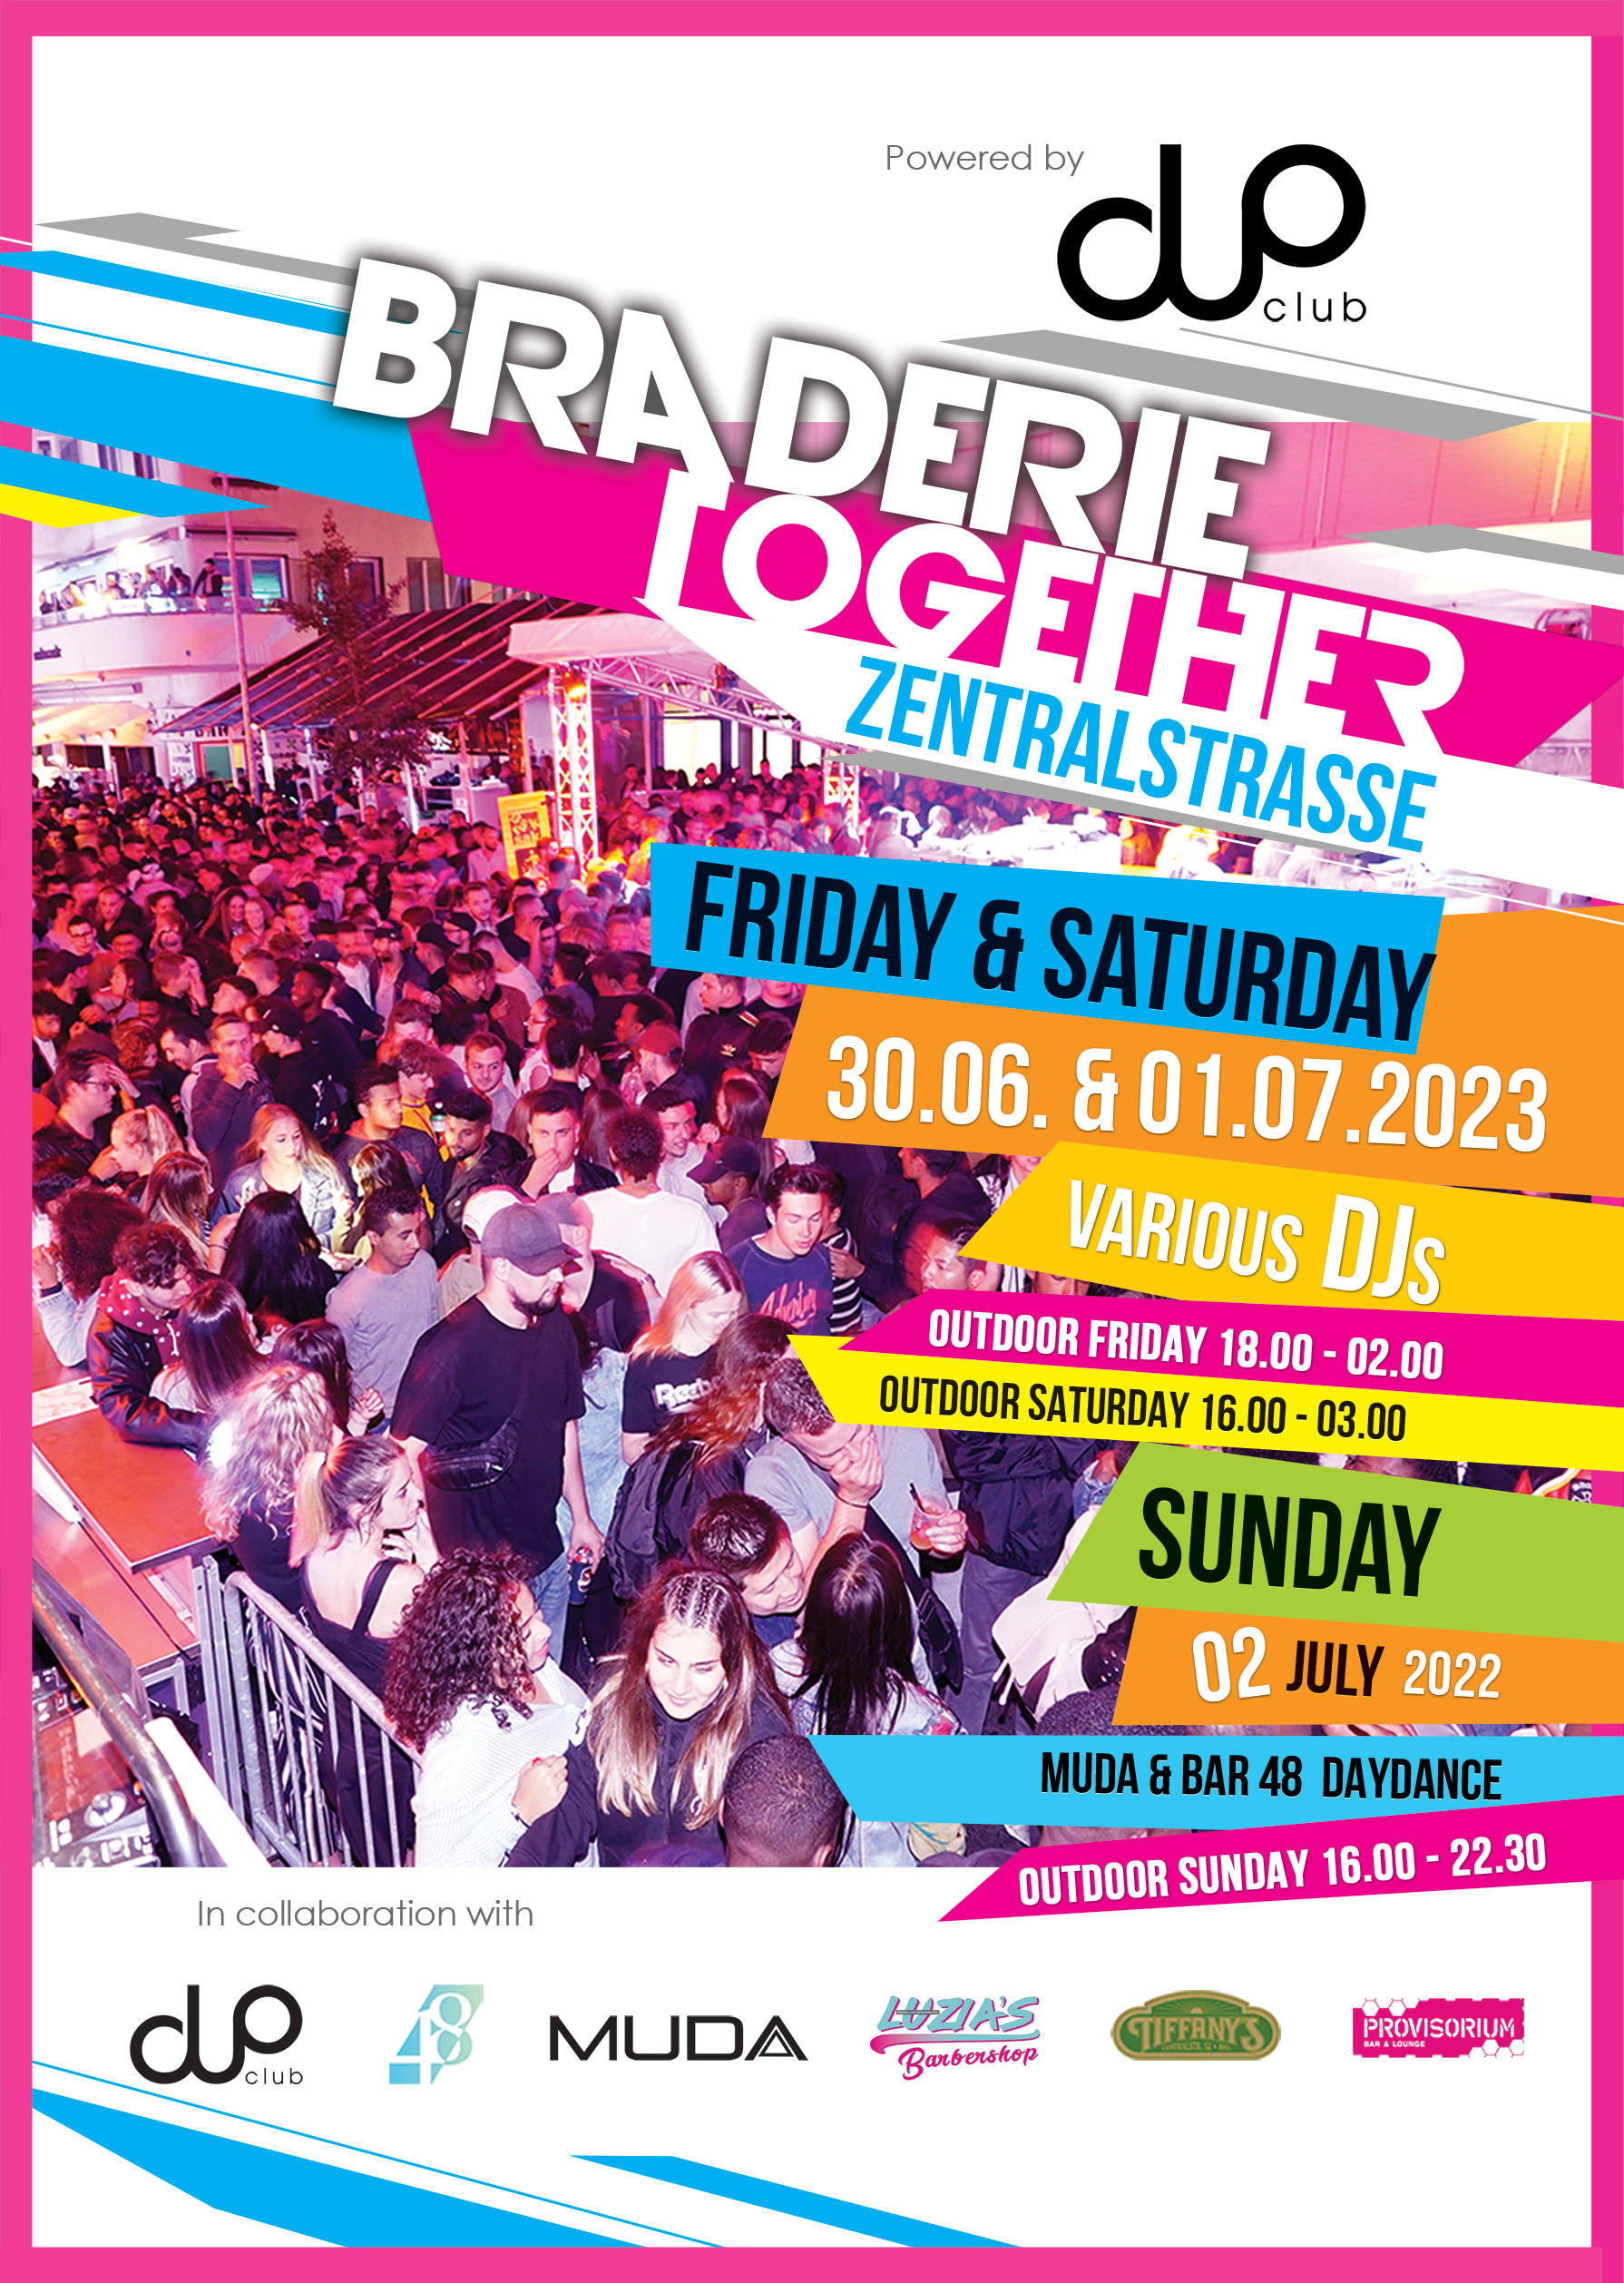 Braderie Together Biel Bienne Duo Club